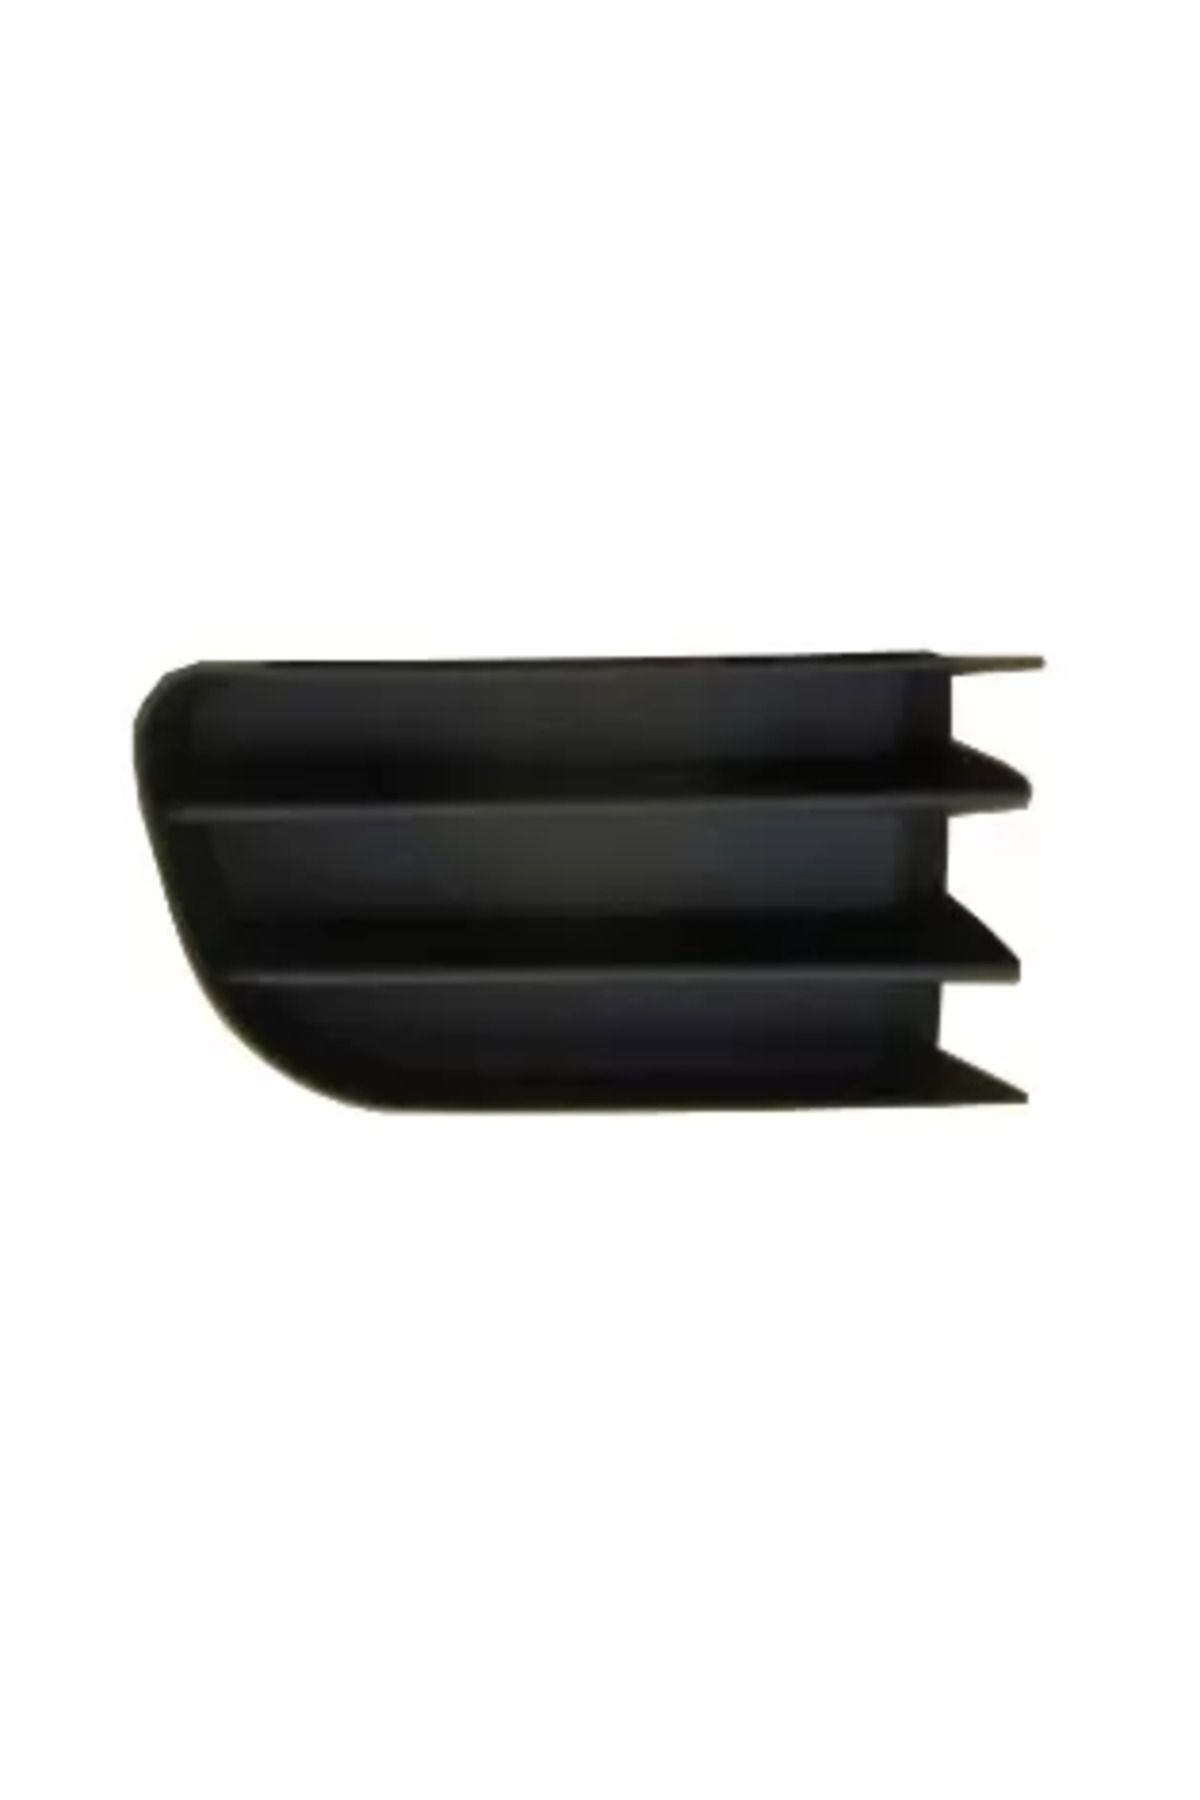 Genel Markalar Renault Megane- 2- 03-06 Sis Lamba Kapağı Sağ Siyah (SİS DELİKSİZ) Oem No: 7701474480 Uyumlu 1444-20